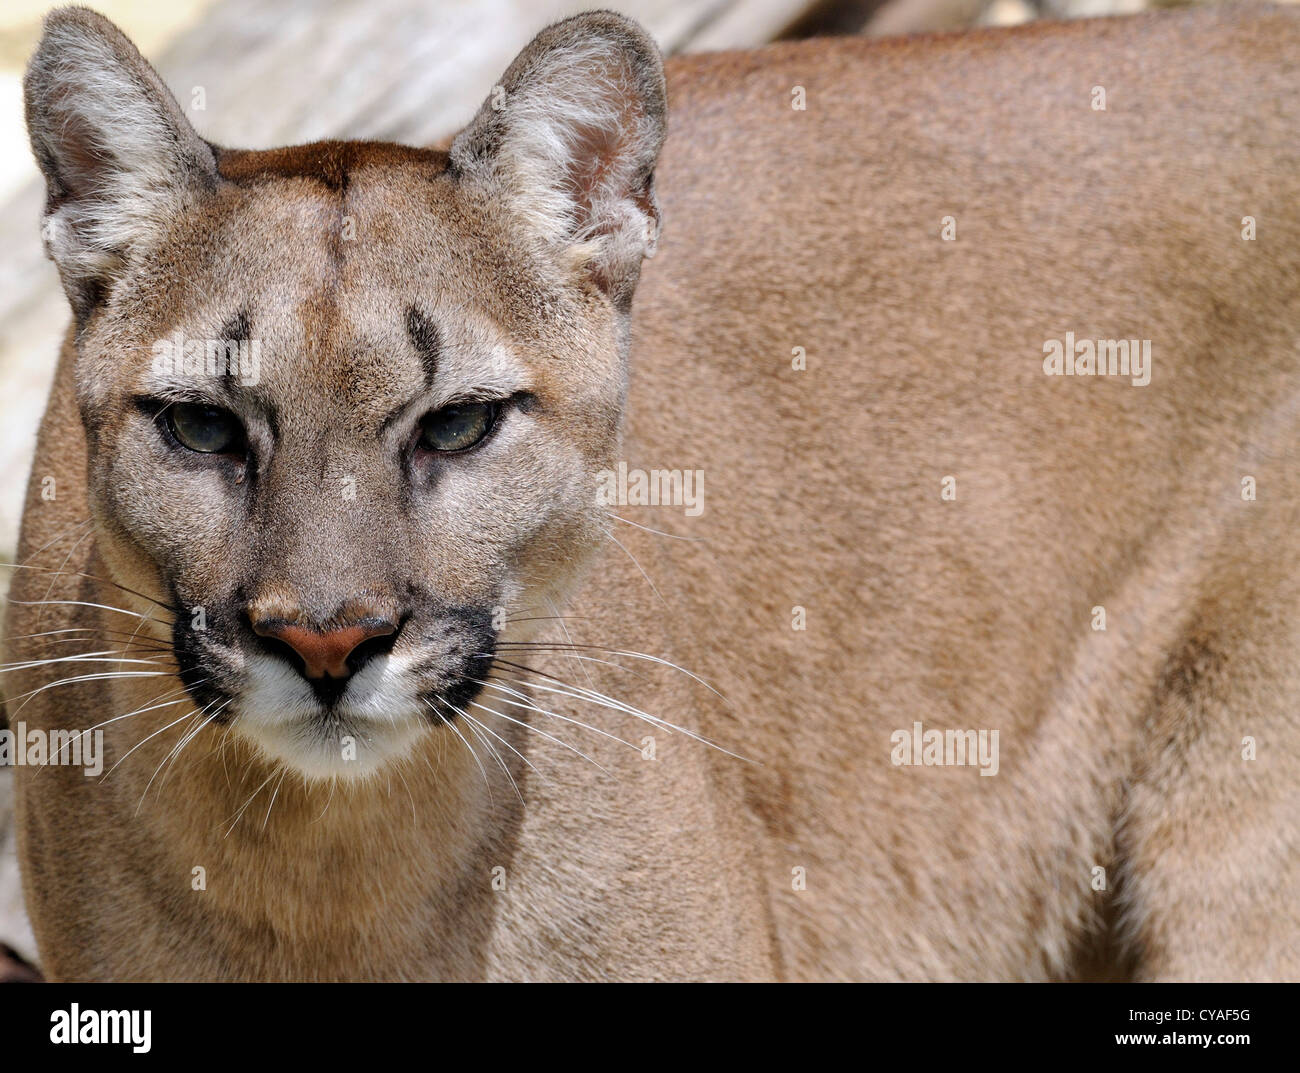 Berglöwe (Puma Concolor), auch bekannt als Cougar, Puma, Puma, Panther, Catamount.  Gefangene Tier. Stockfoto